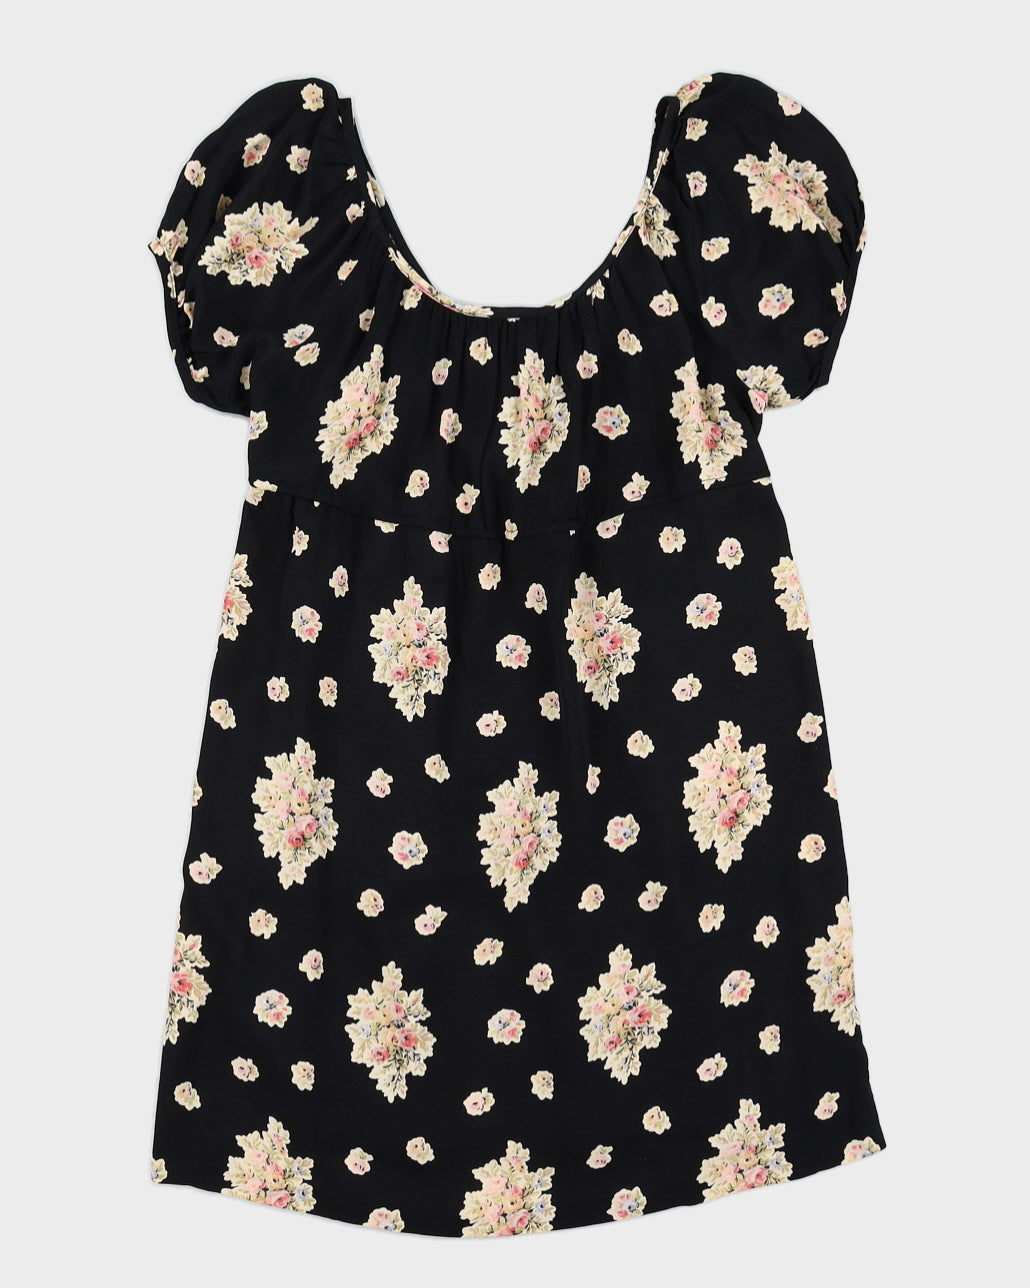 Betsey Johnson Black Floral Milkmaid Style Mini Dress - L